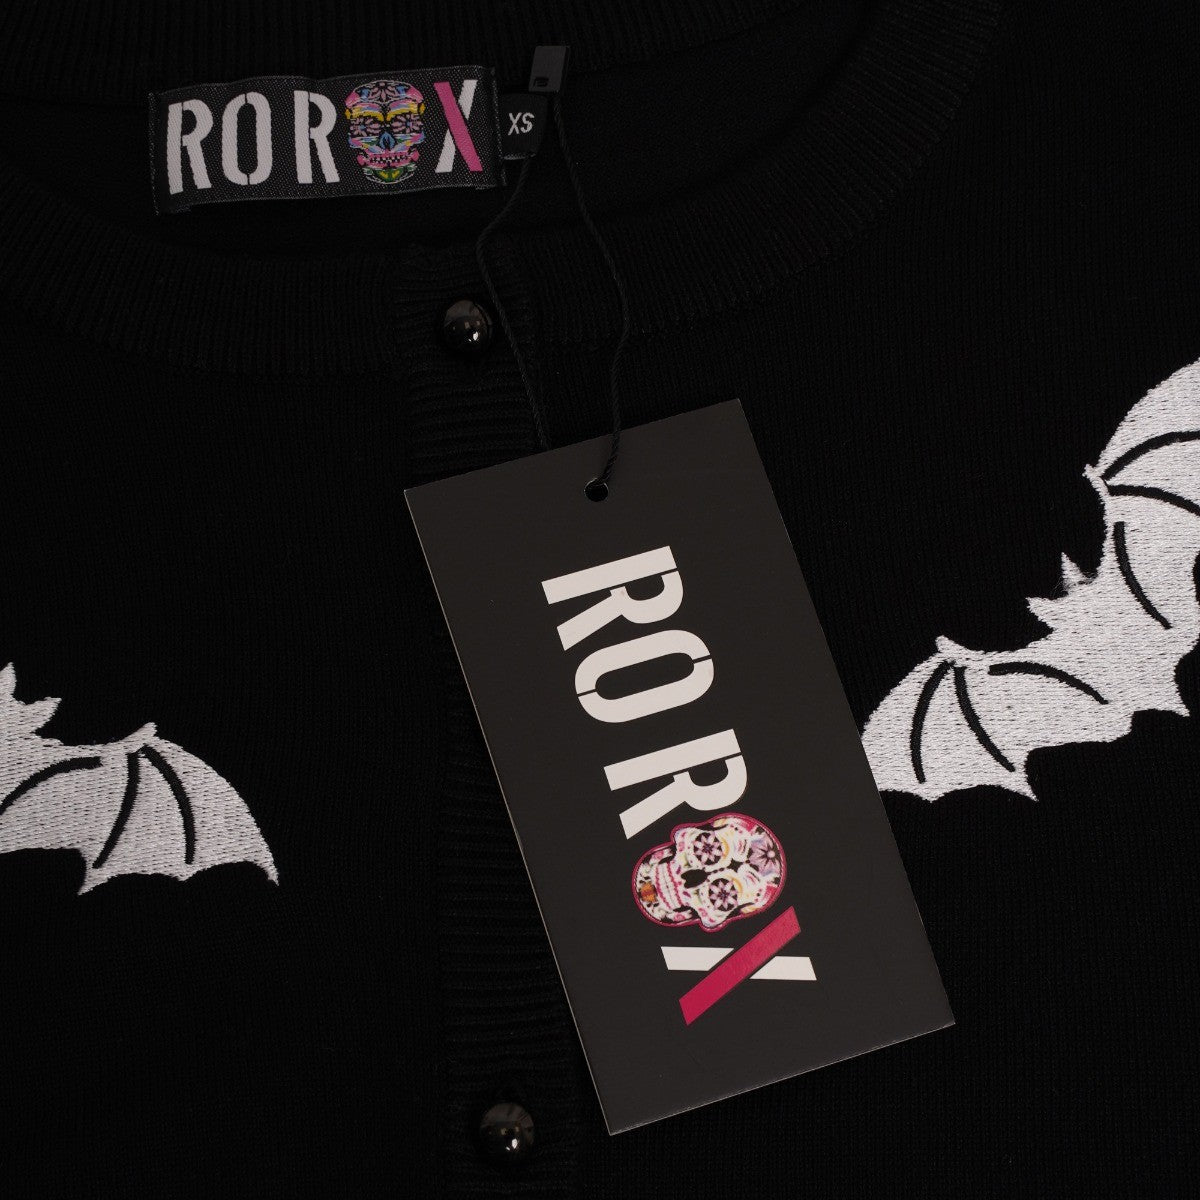 Ro Rox Marya Bat Gothic Style Knit Long Sleeve Cardigan